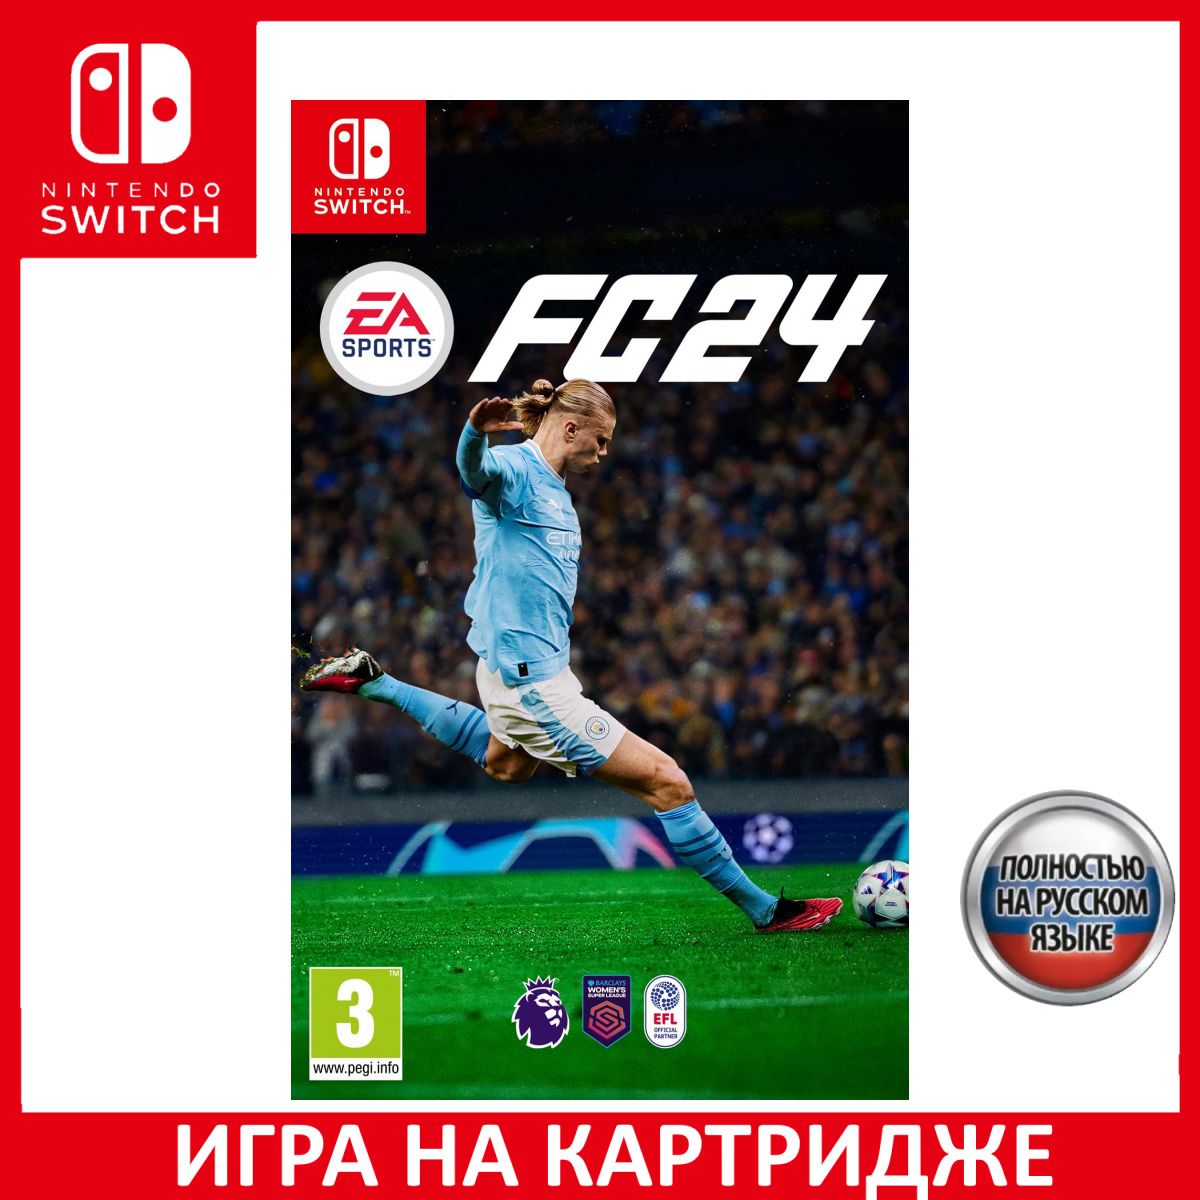 ФИФА 24 Нинтендо. FC 24 на Nintendo Switch Российская лига. ФИФА 24 на Нинтендо свитч обзор.